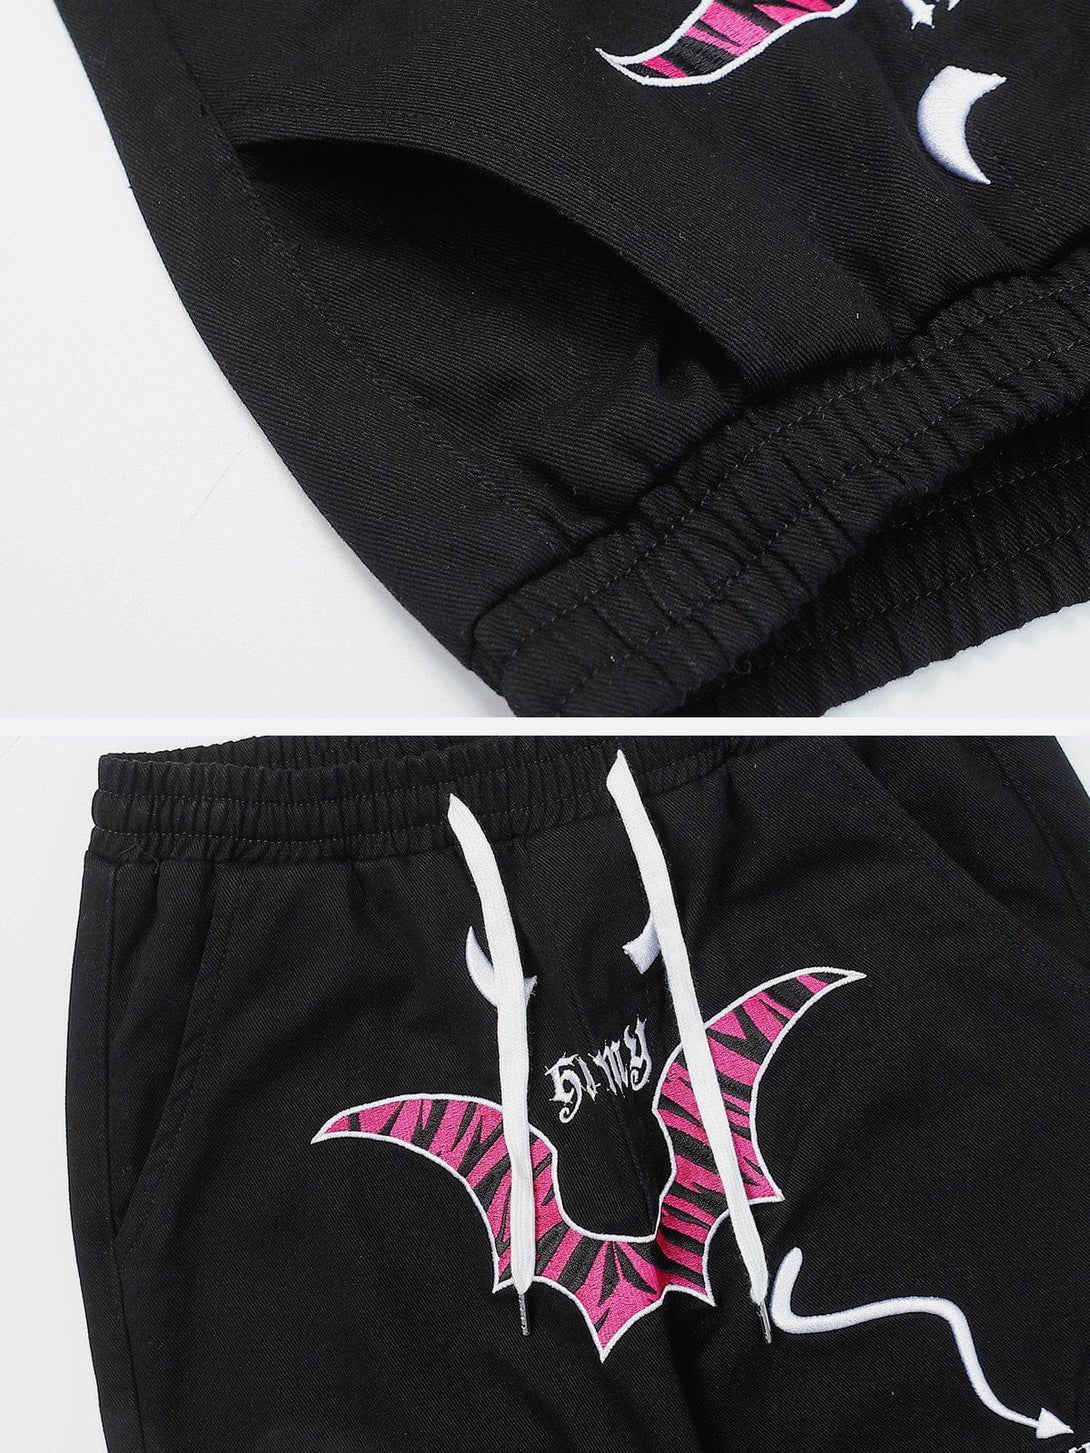 Levefly - Cartoon Bat Elastic Pants - Streetwear Fashion - levefly.com